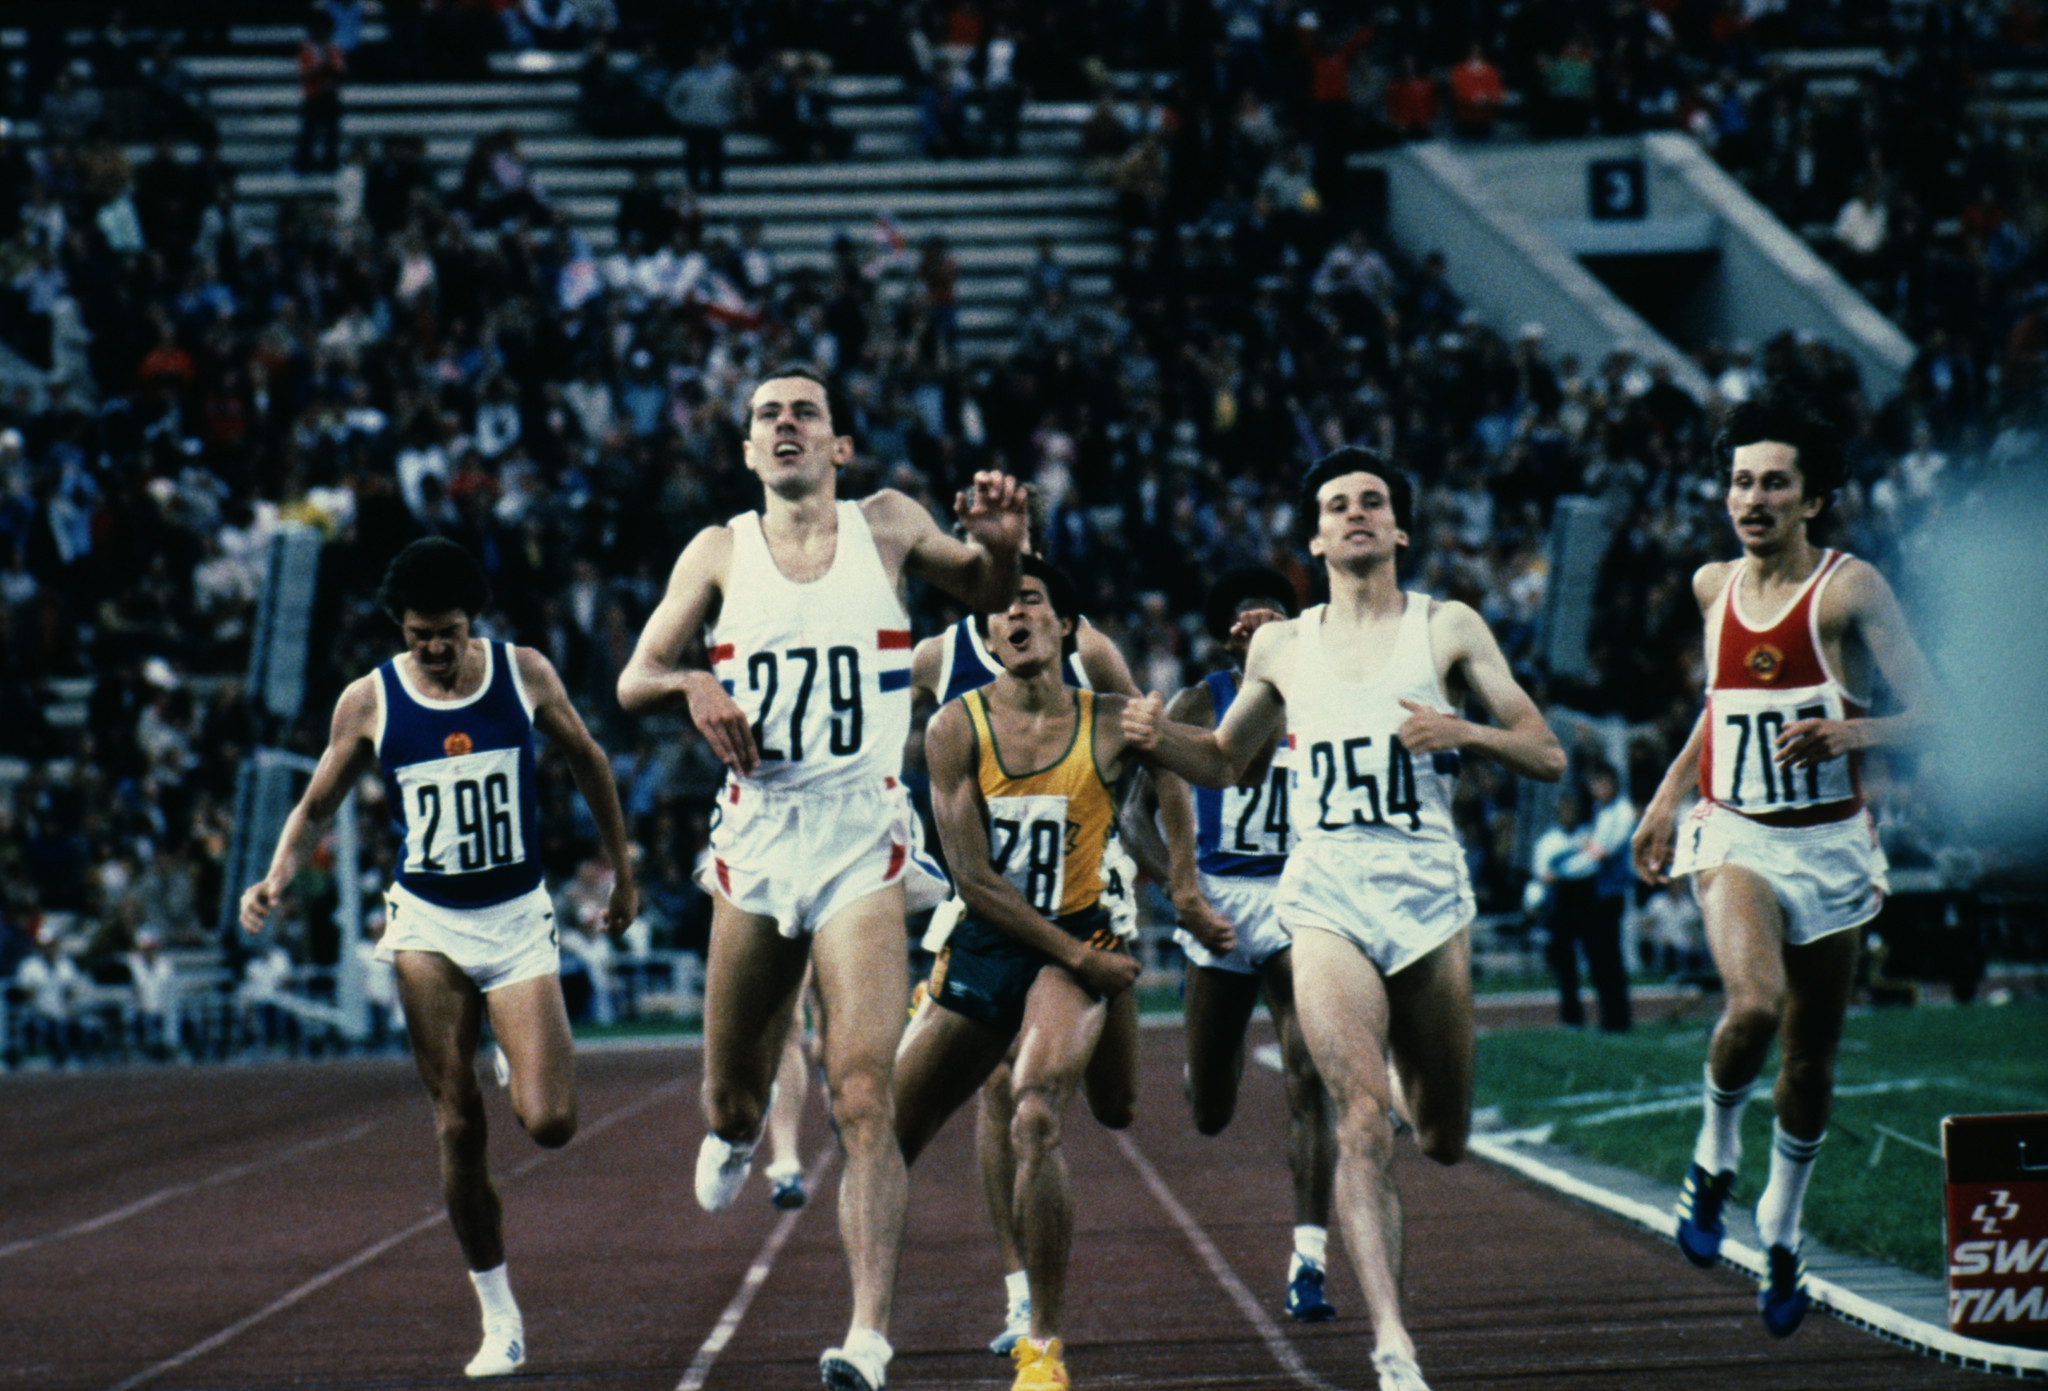 The battles between Steve Ovett, left, and now World Athletics President Sebastian Coe captured the imagination ©Getty Images